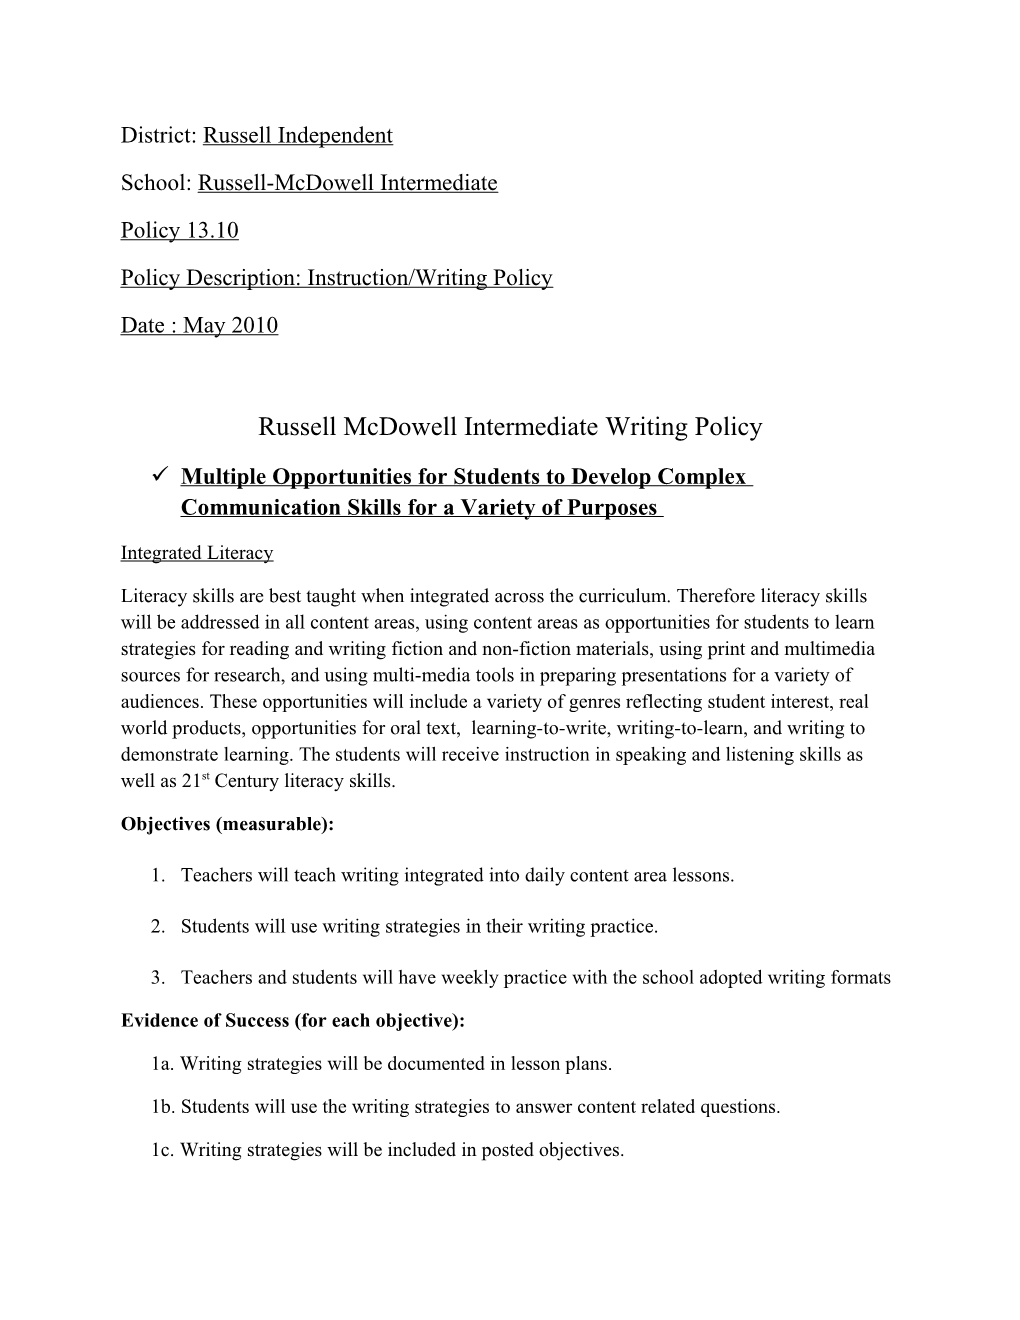 Russell Mcdowell Intermediate Writing Plan